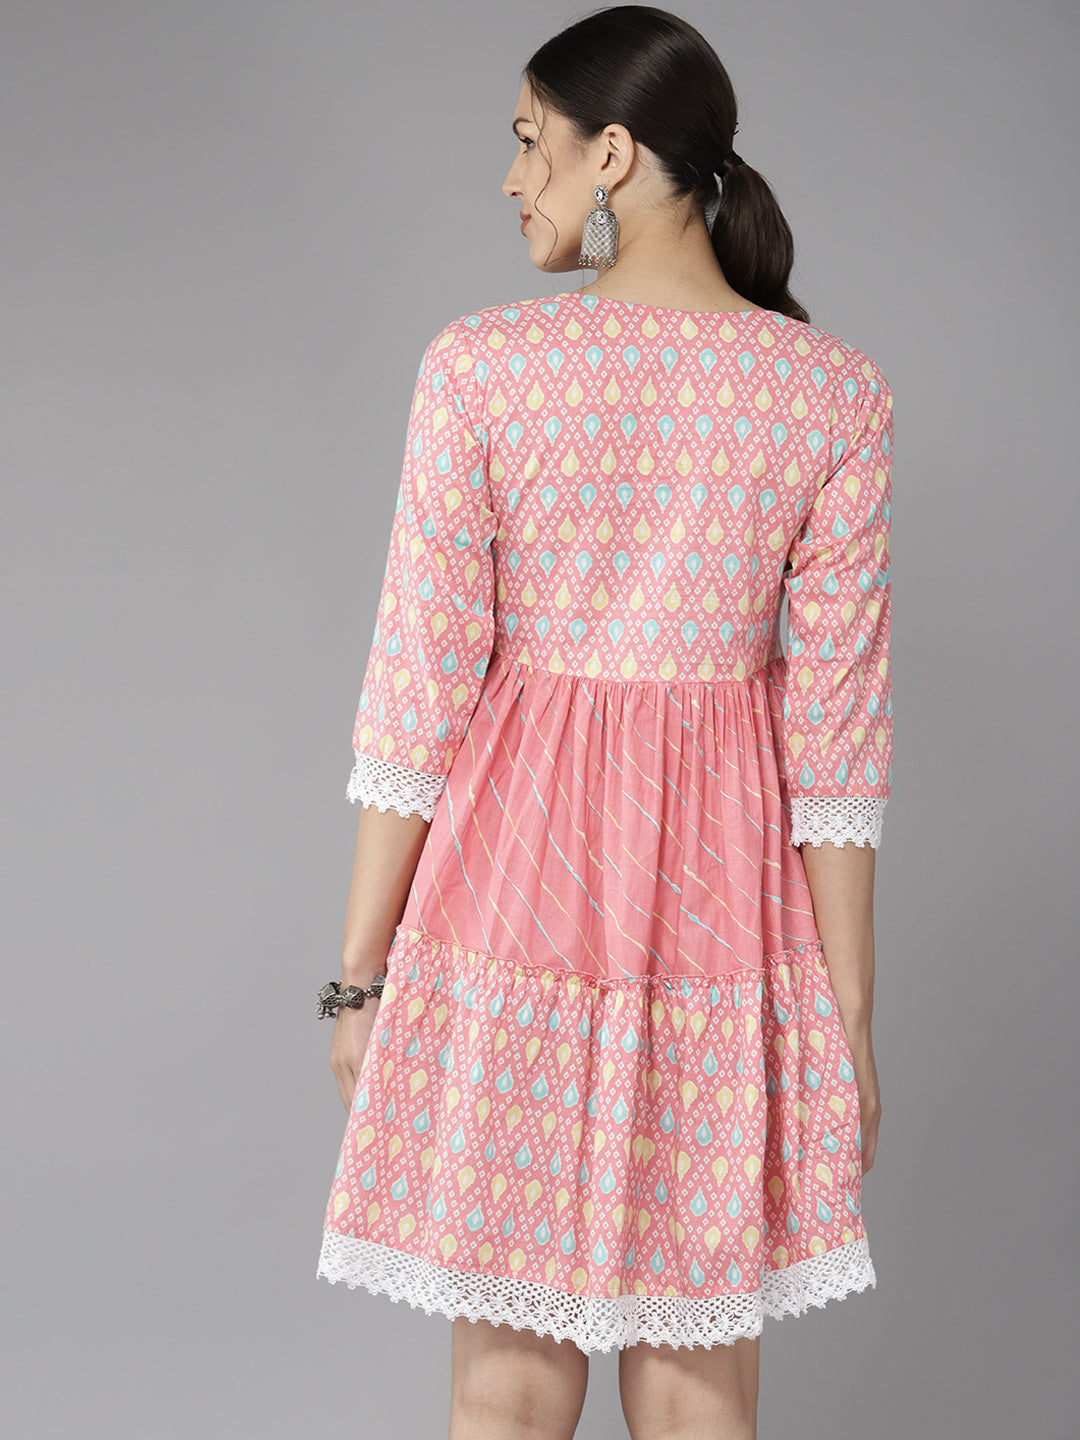 Women's Pink Embroidery A-Line Dress - Yufta